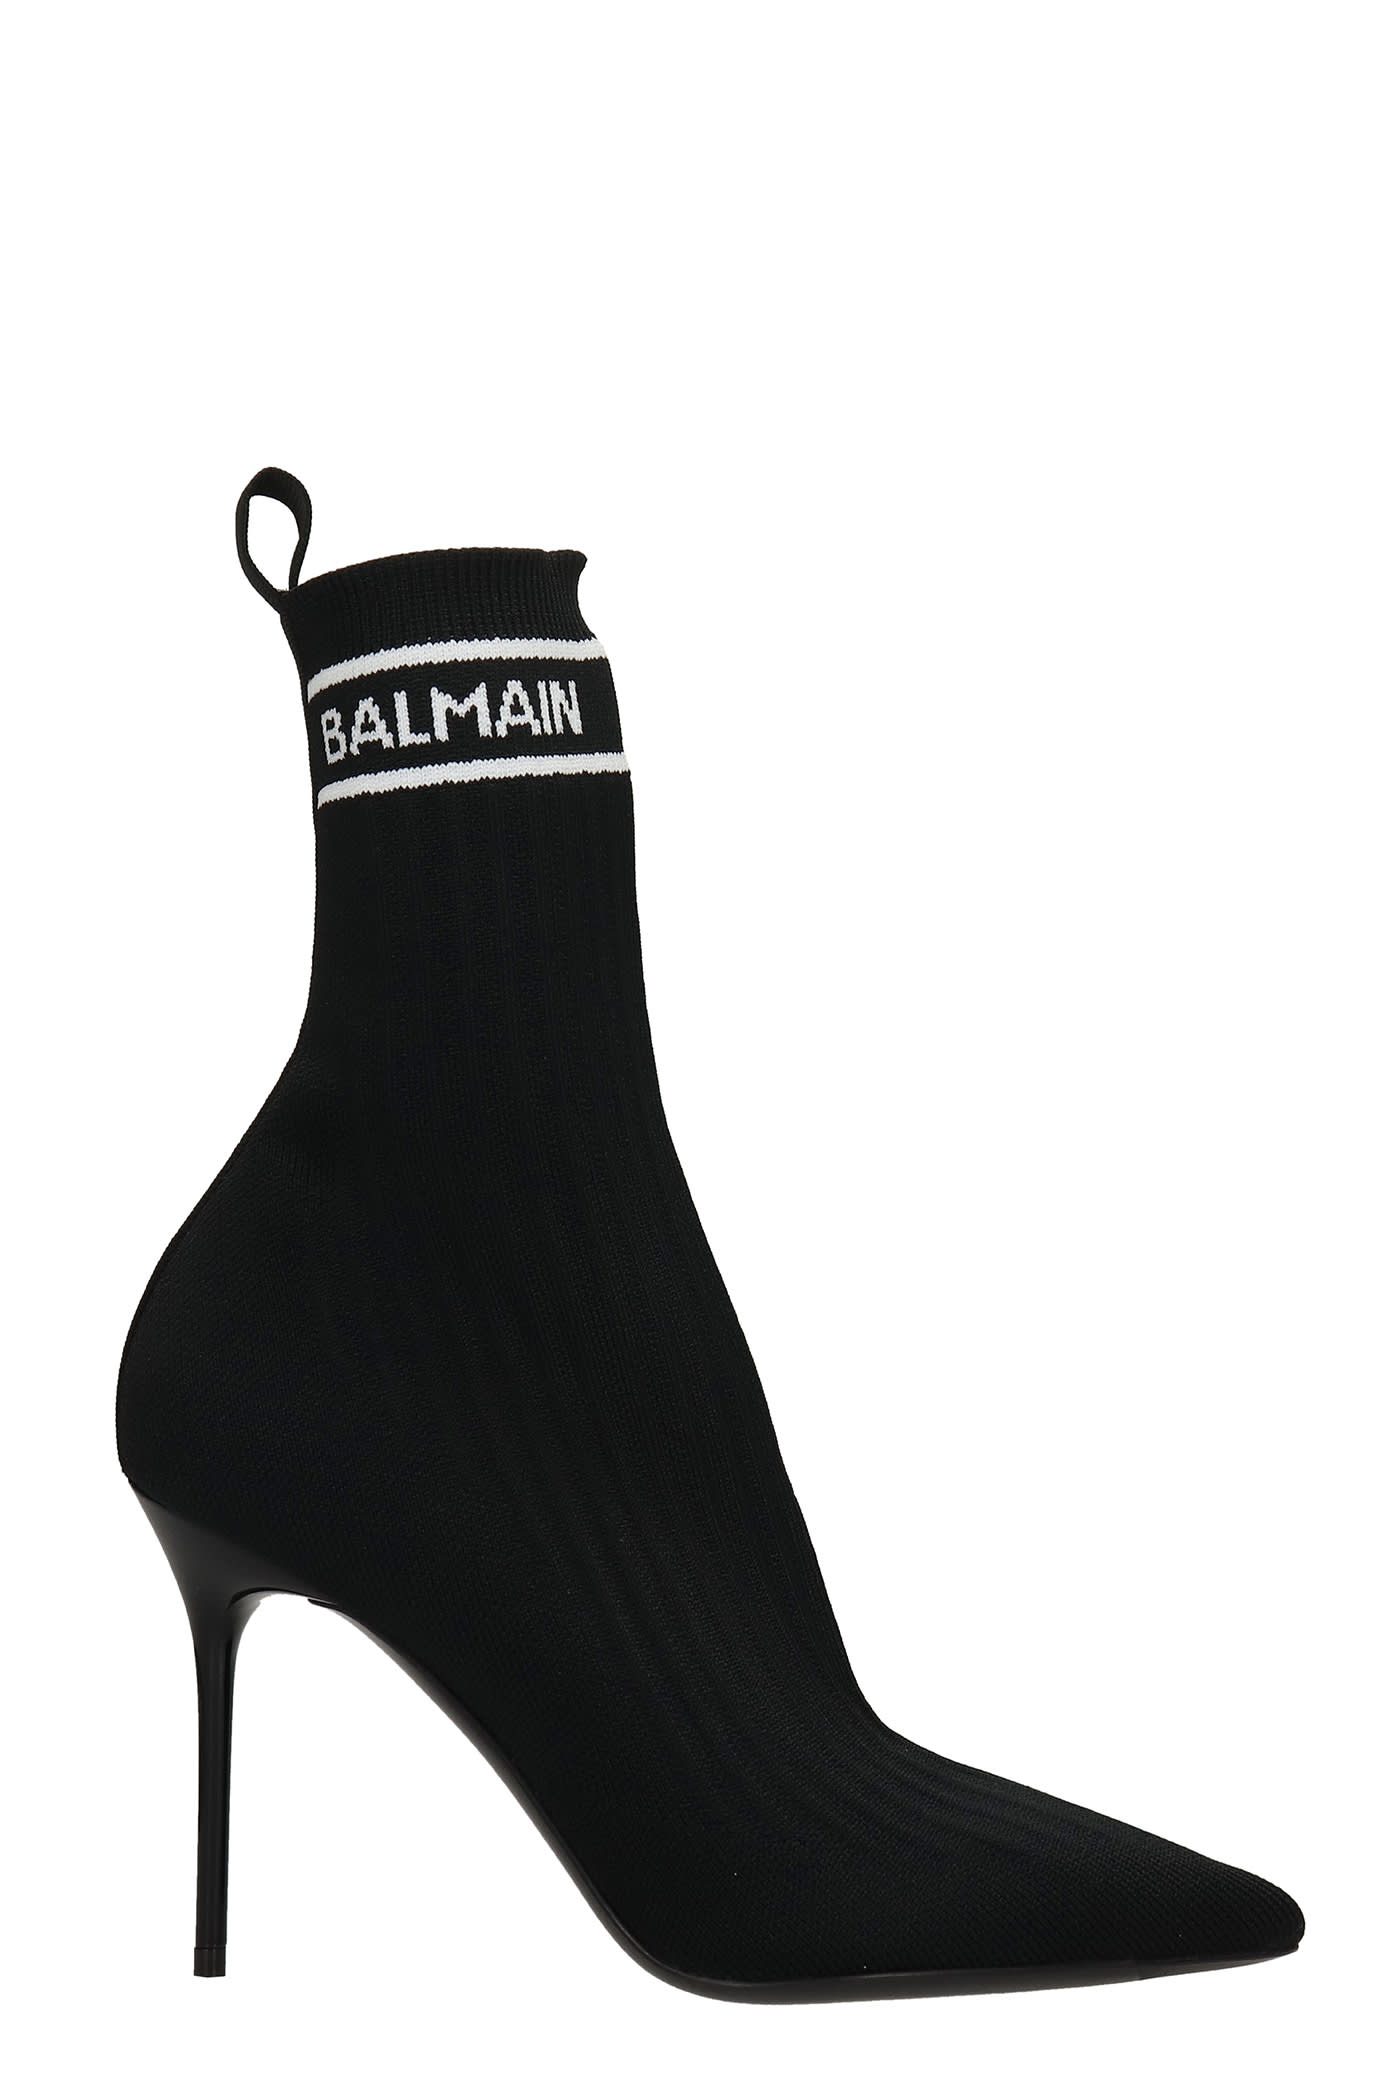 Balmain High Heels Ankle Boots In Black Viscose